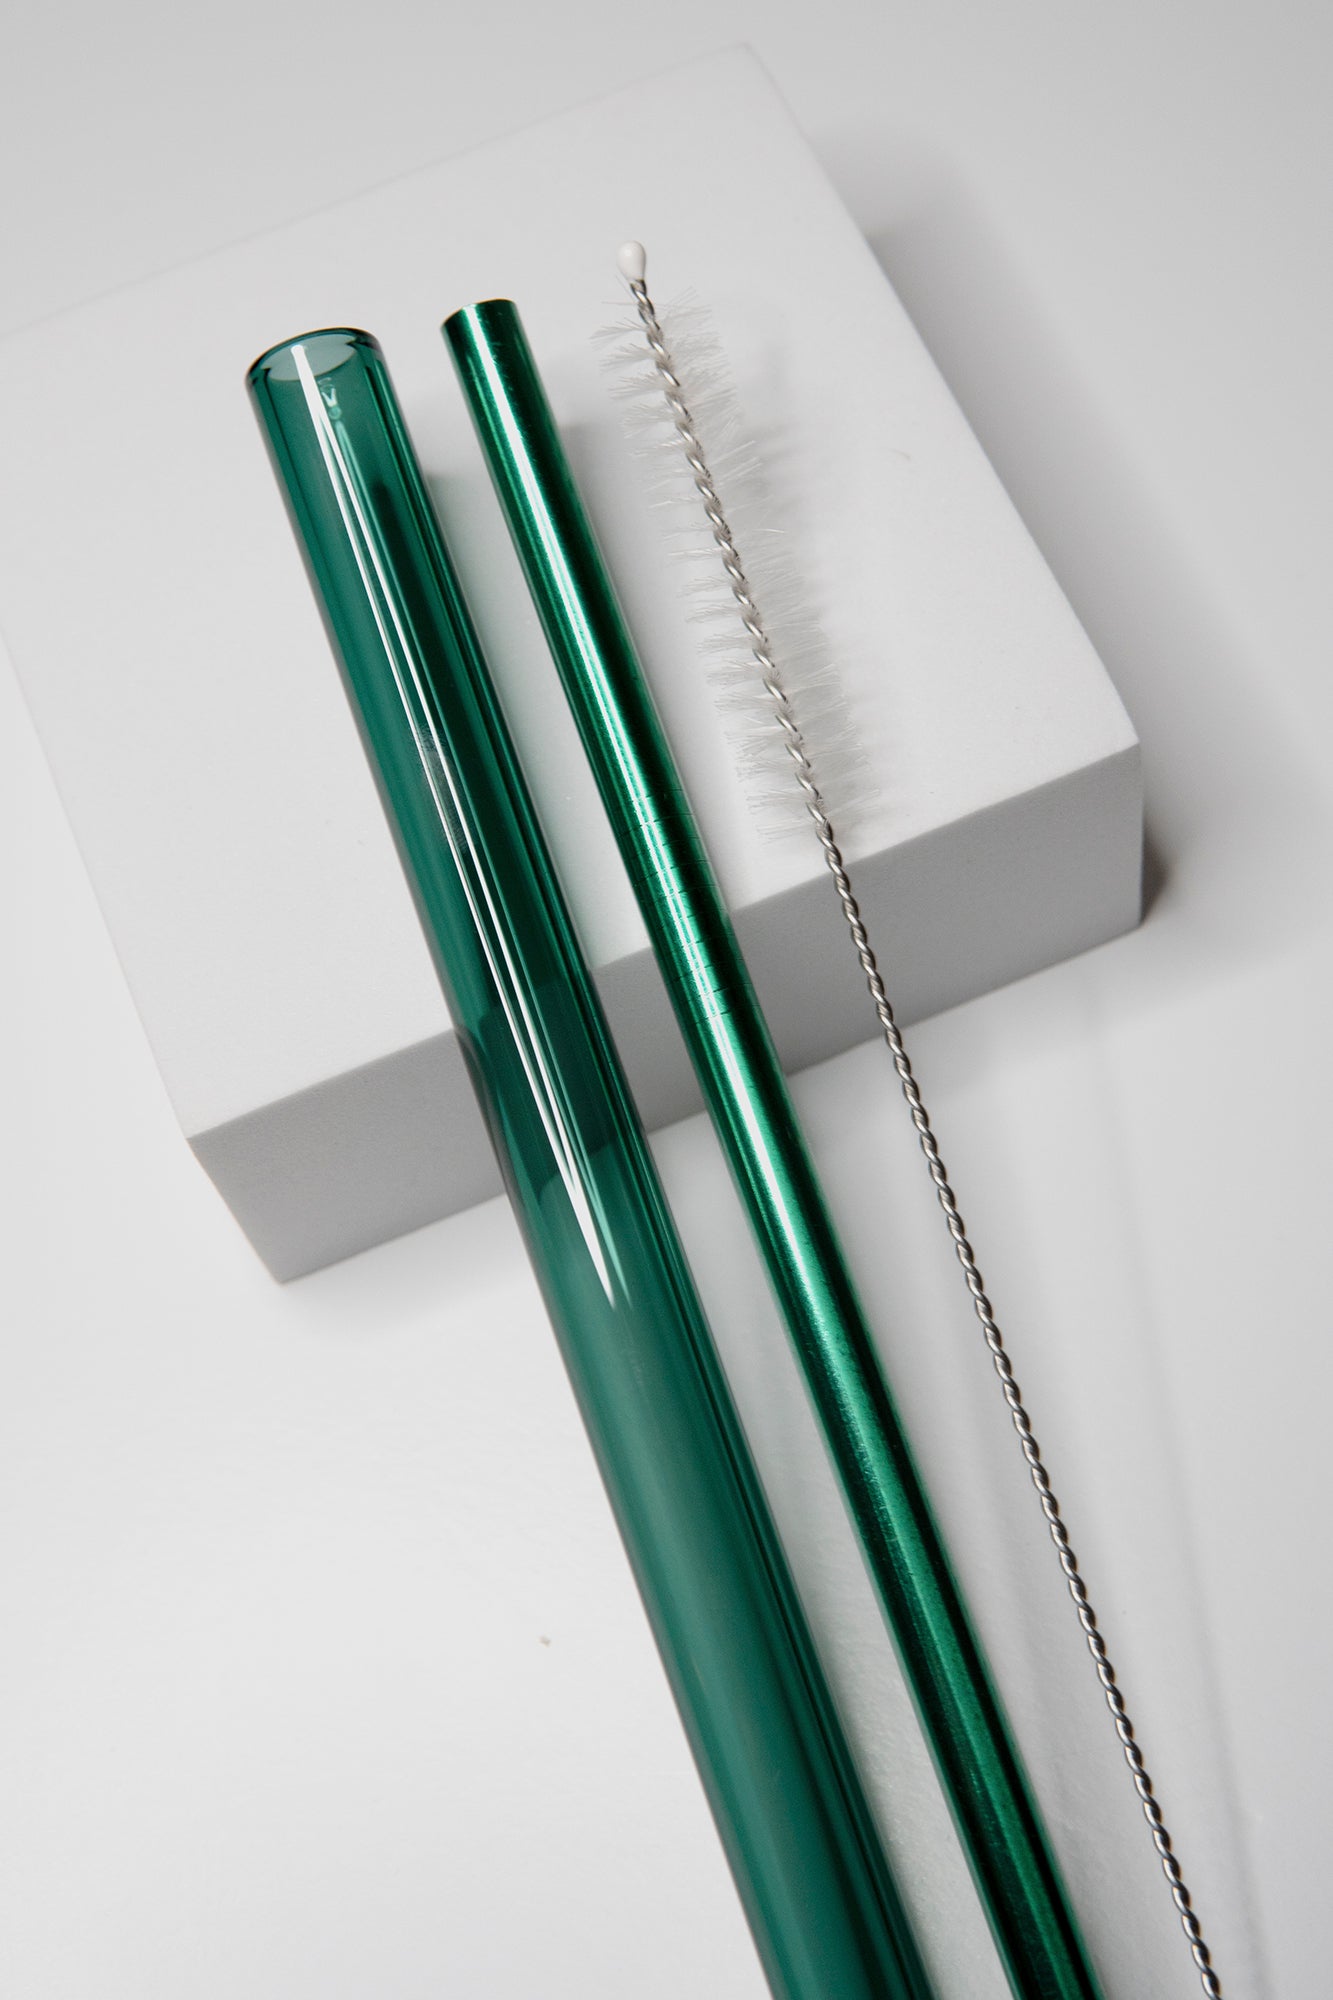 Large 12mm Glass Boba Straws (4-Pack)